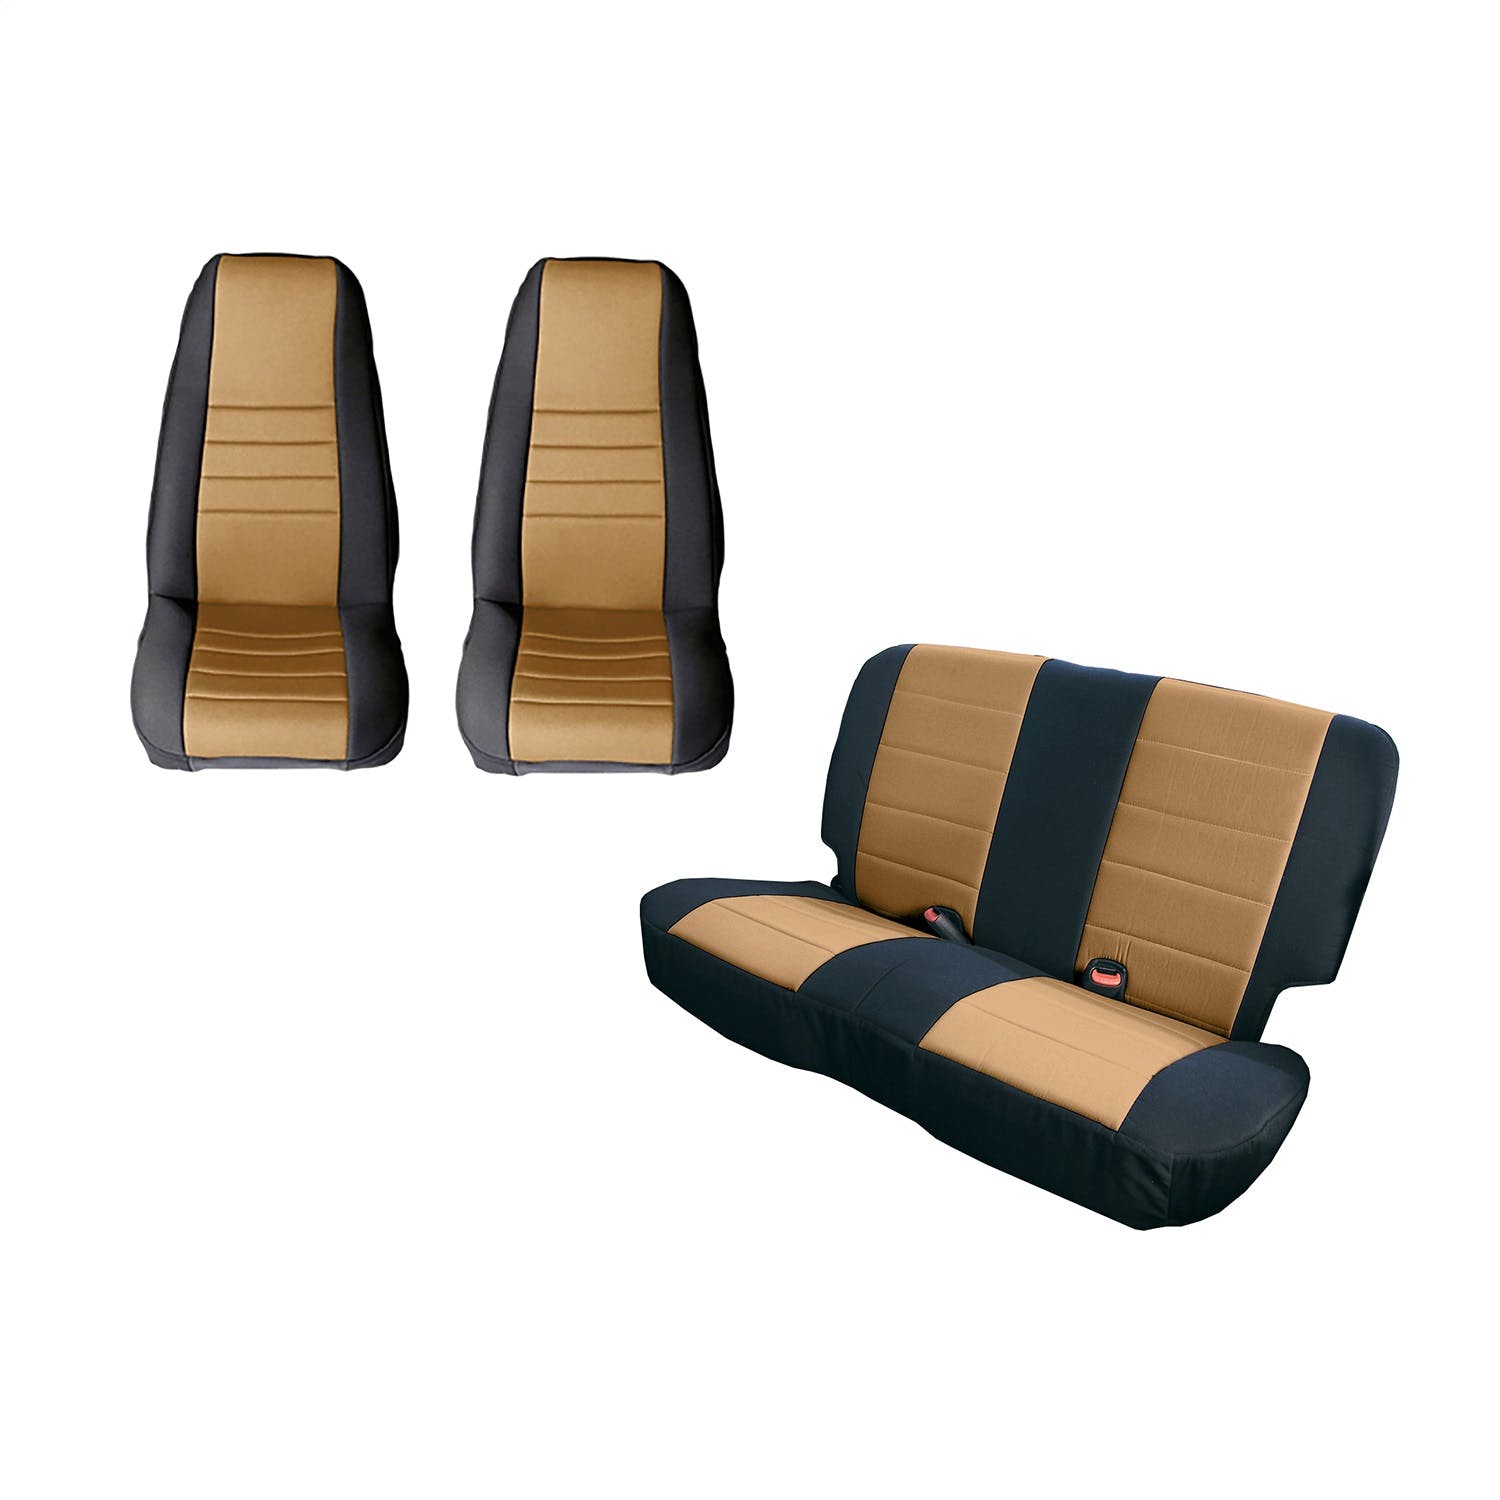 Rugged Ridge 13290.04 Seat Cover Kit, Black/Tan